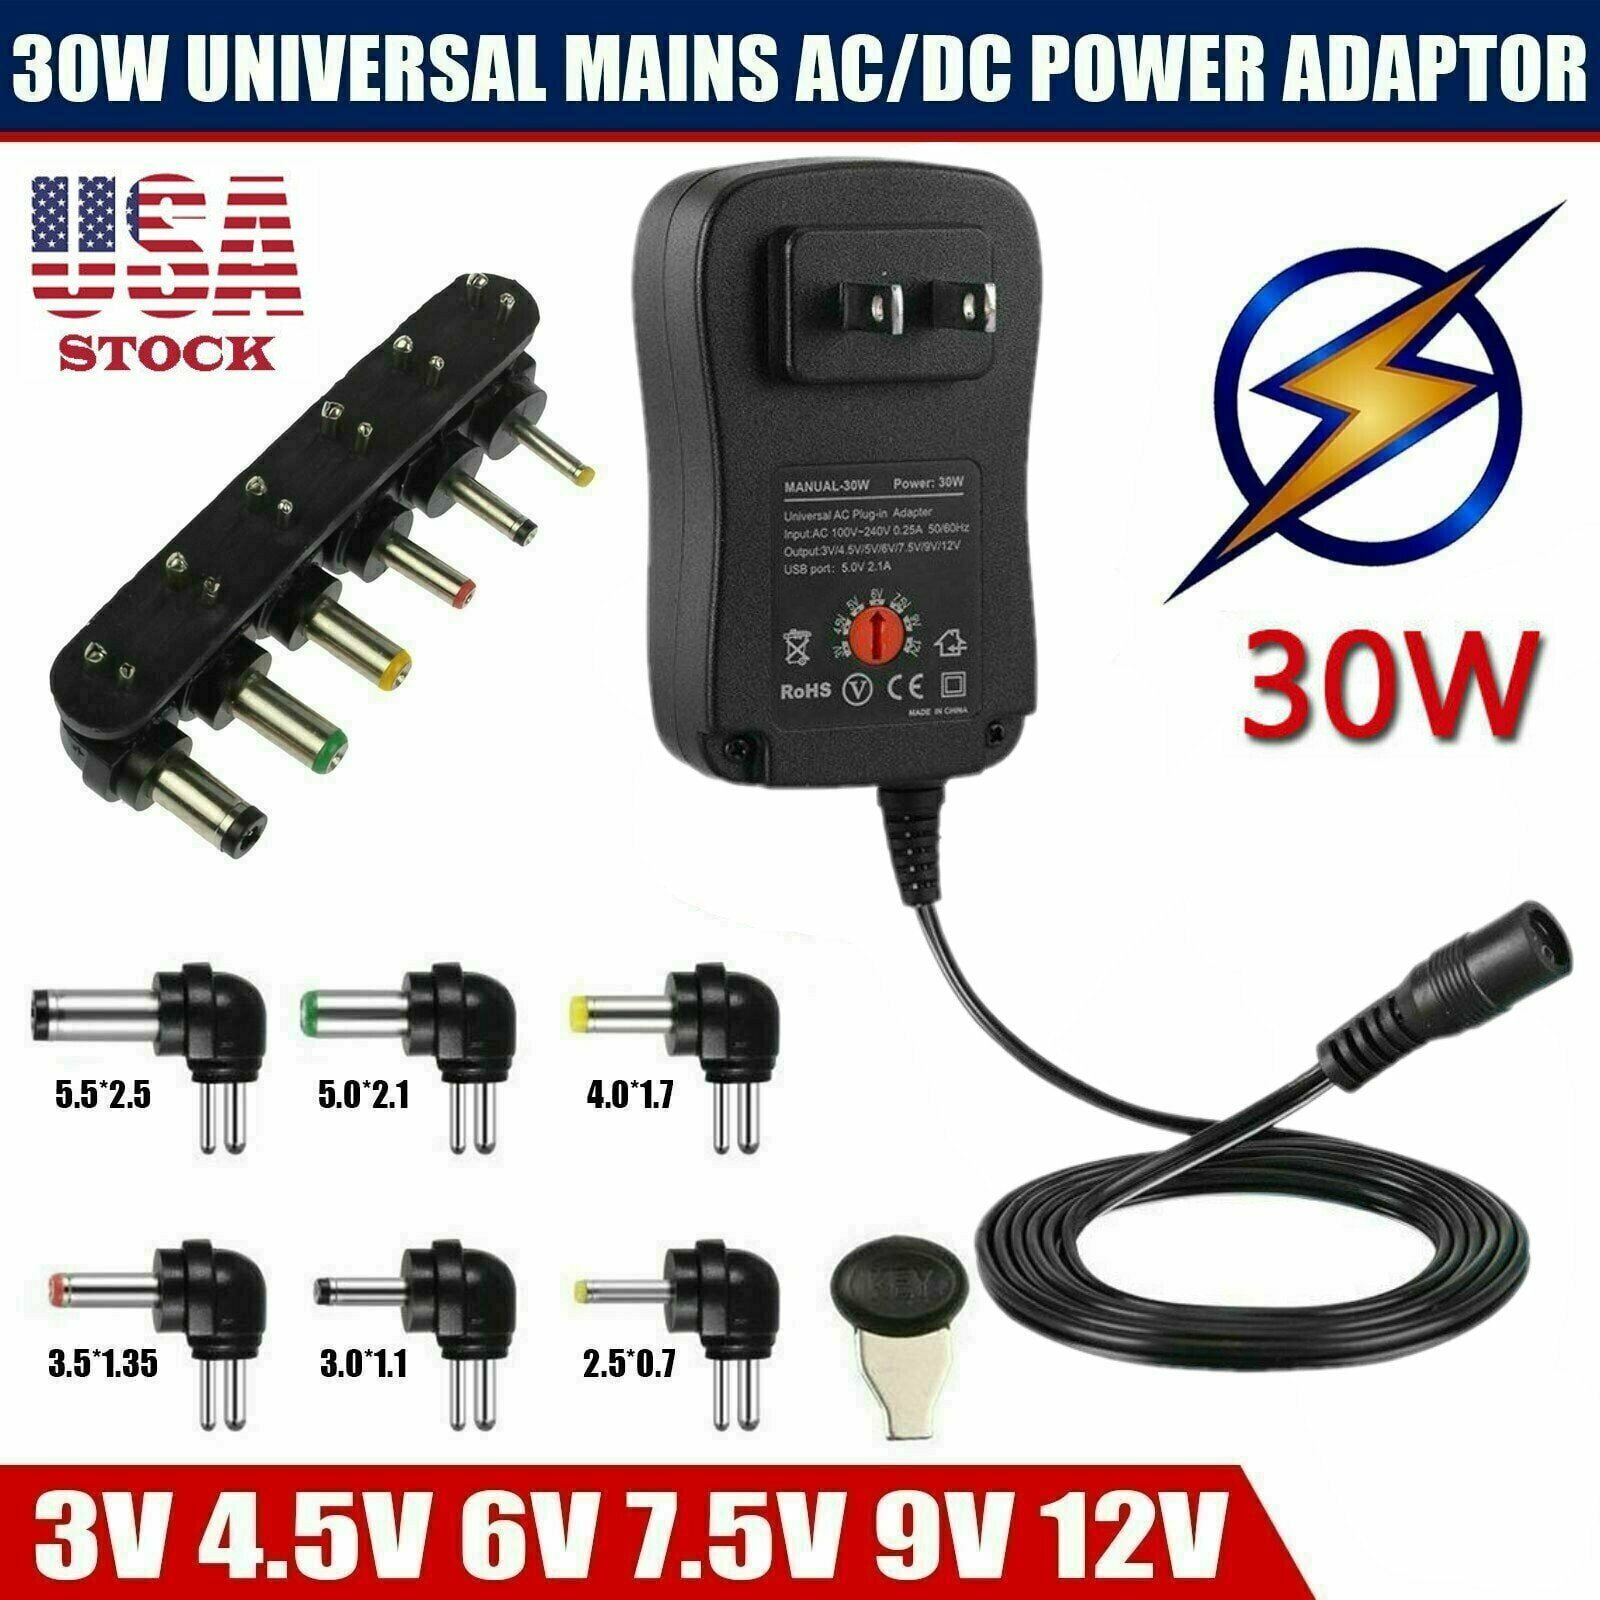 AC/DC 30W Universal Power Adapter 3v-12v Switching Supply USB Port 6 Tips 1000ma 